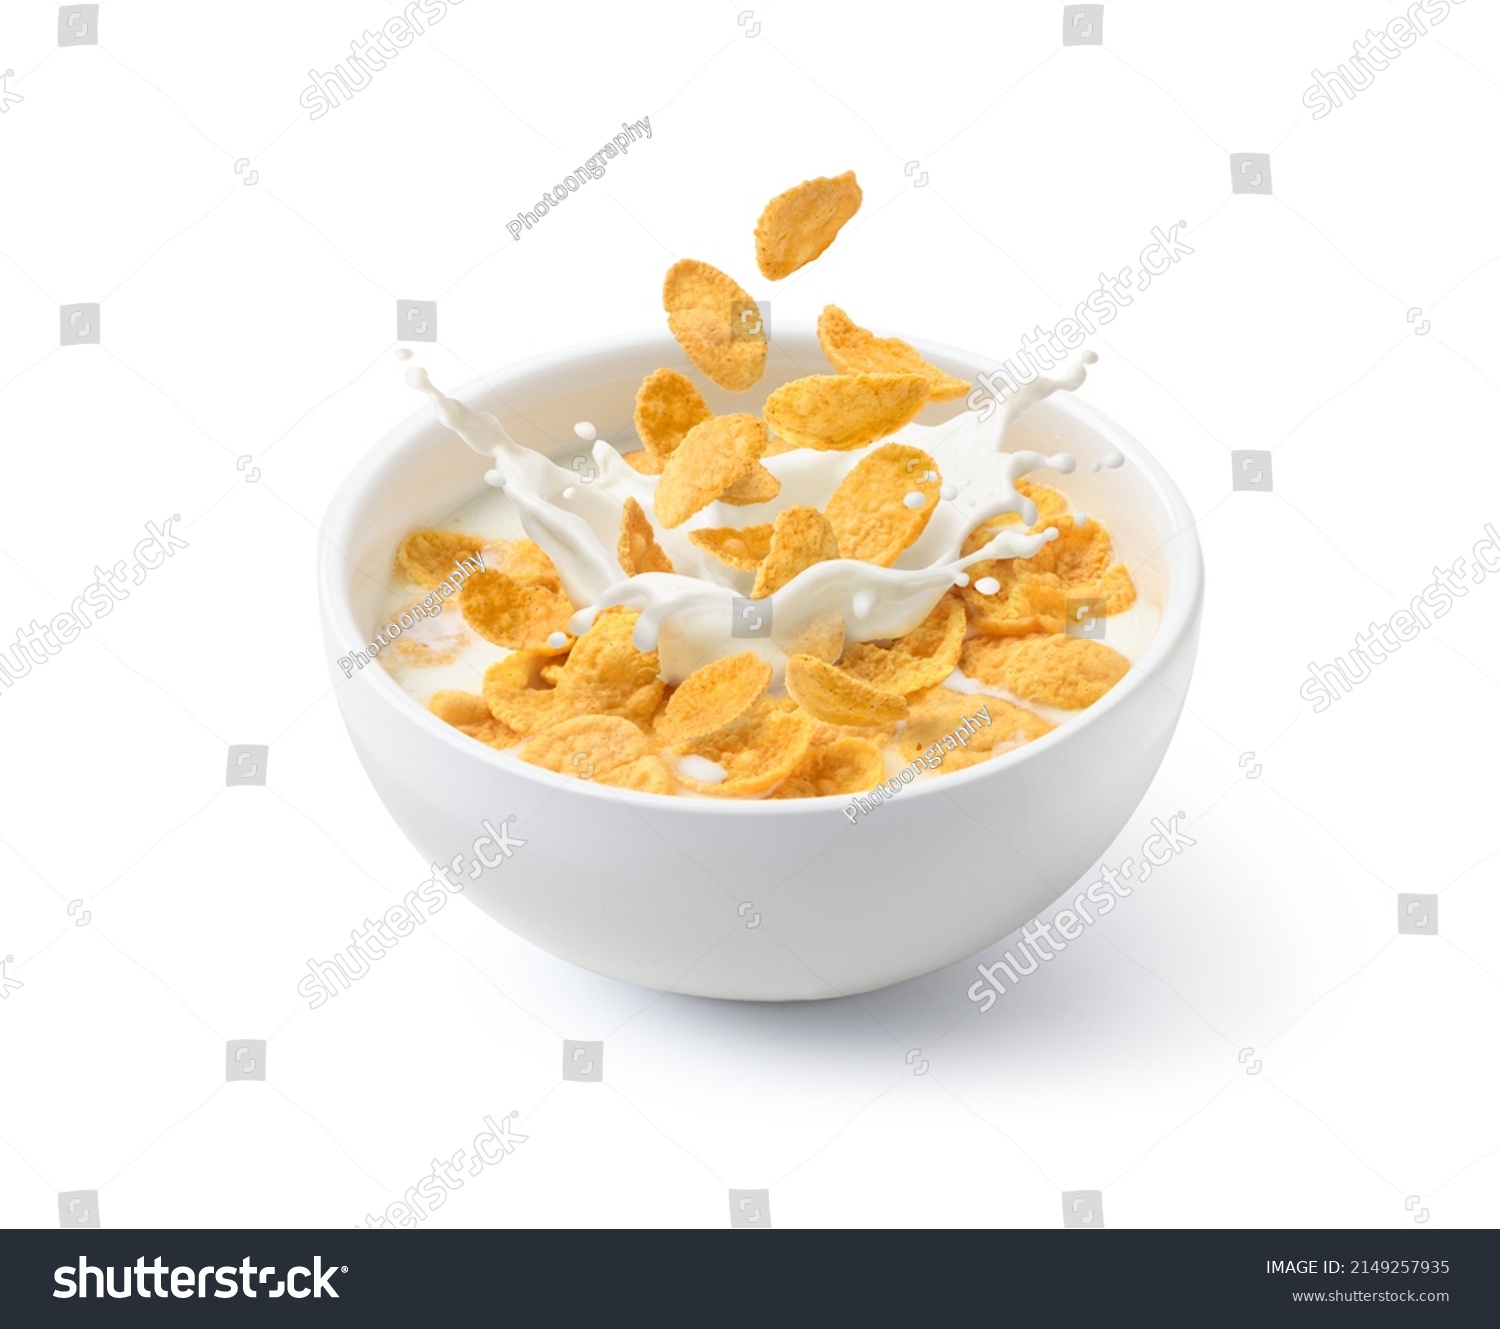 Corn flakes with milk splash in white bowl isolated on white background. #2149257935